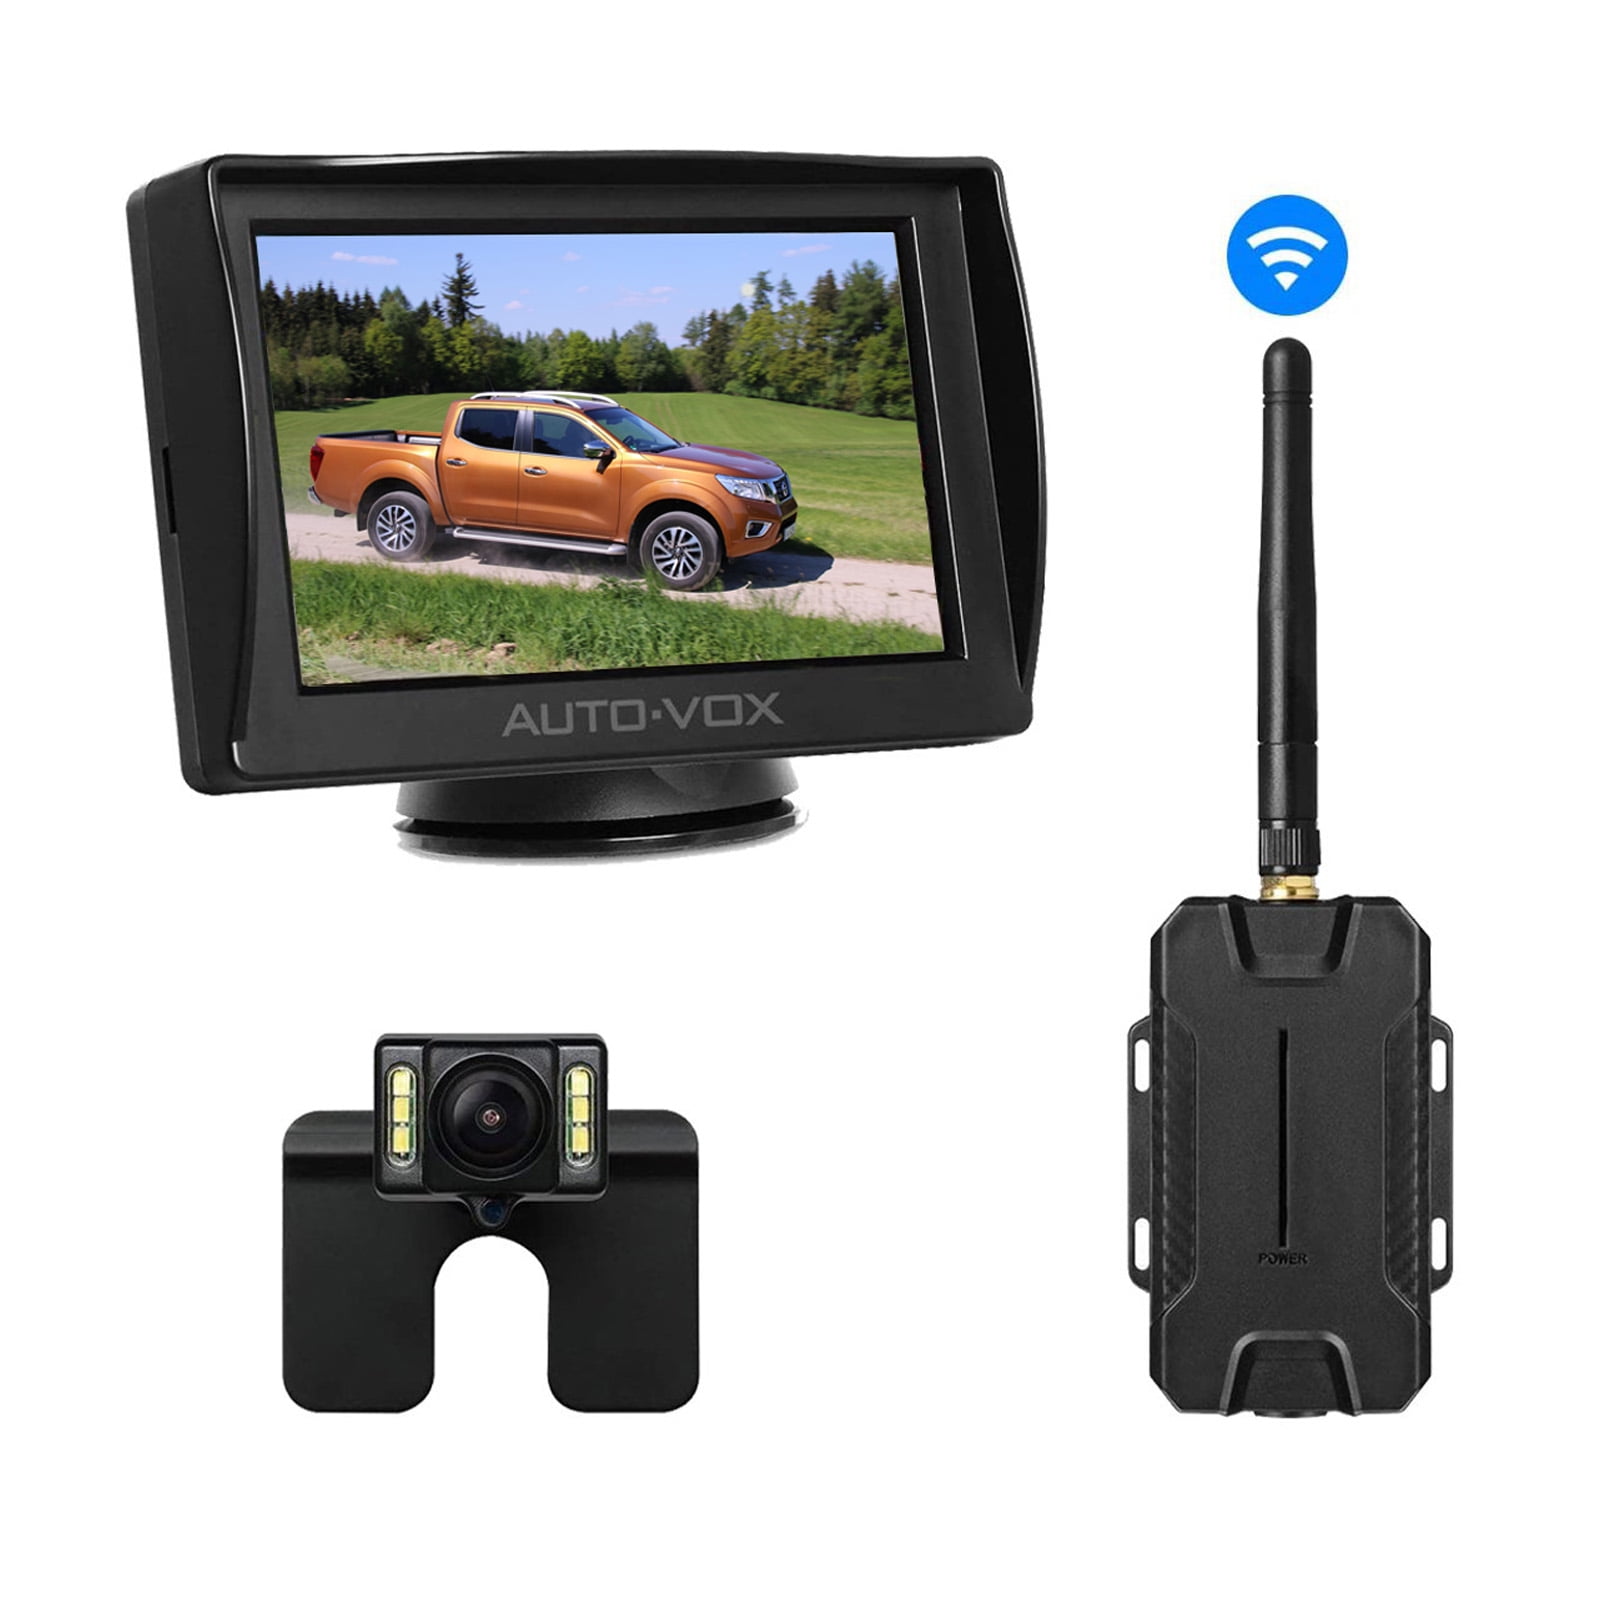 AUTO-VOX M1W Wireless Backup Camera Kit for Car, Waterproof Super